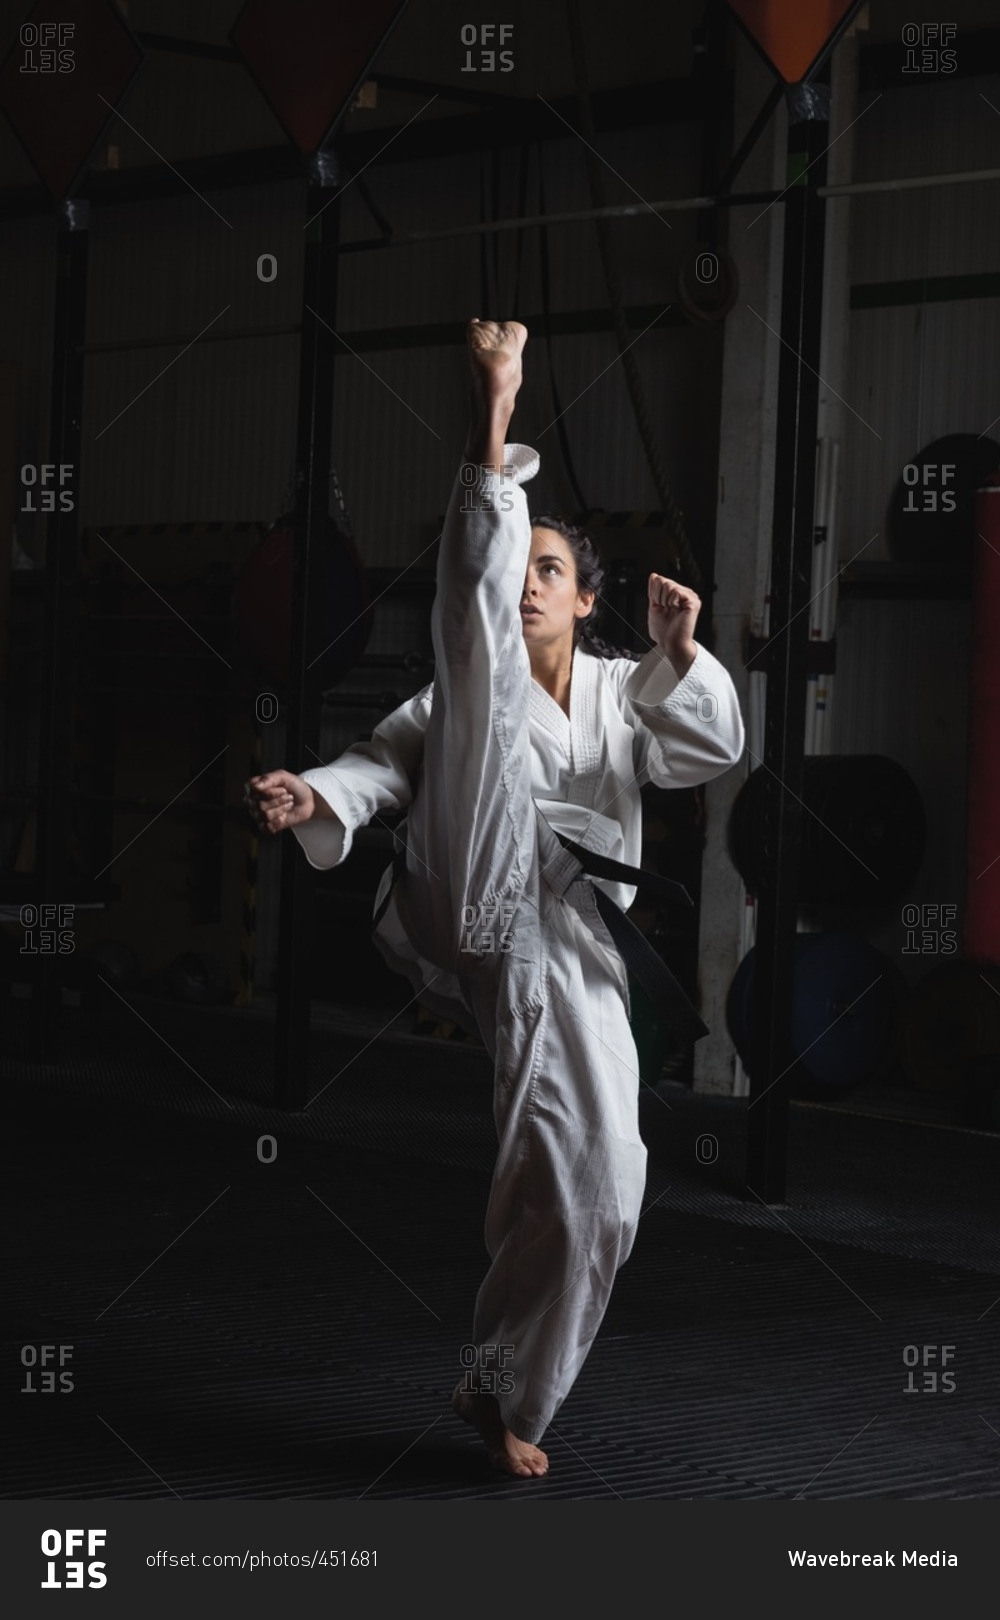 Woman practicing karate in fitness studio